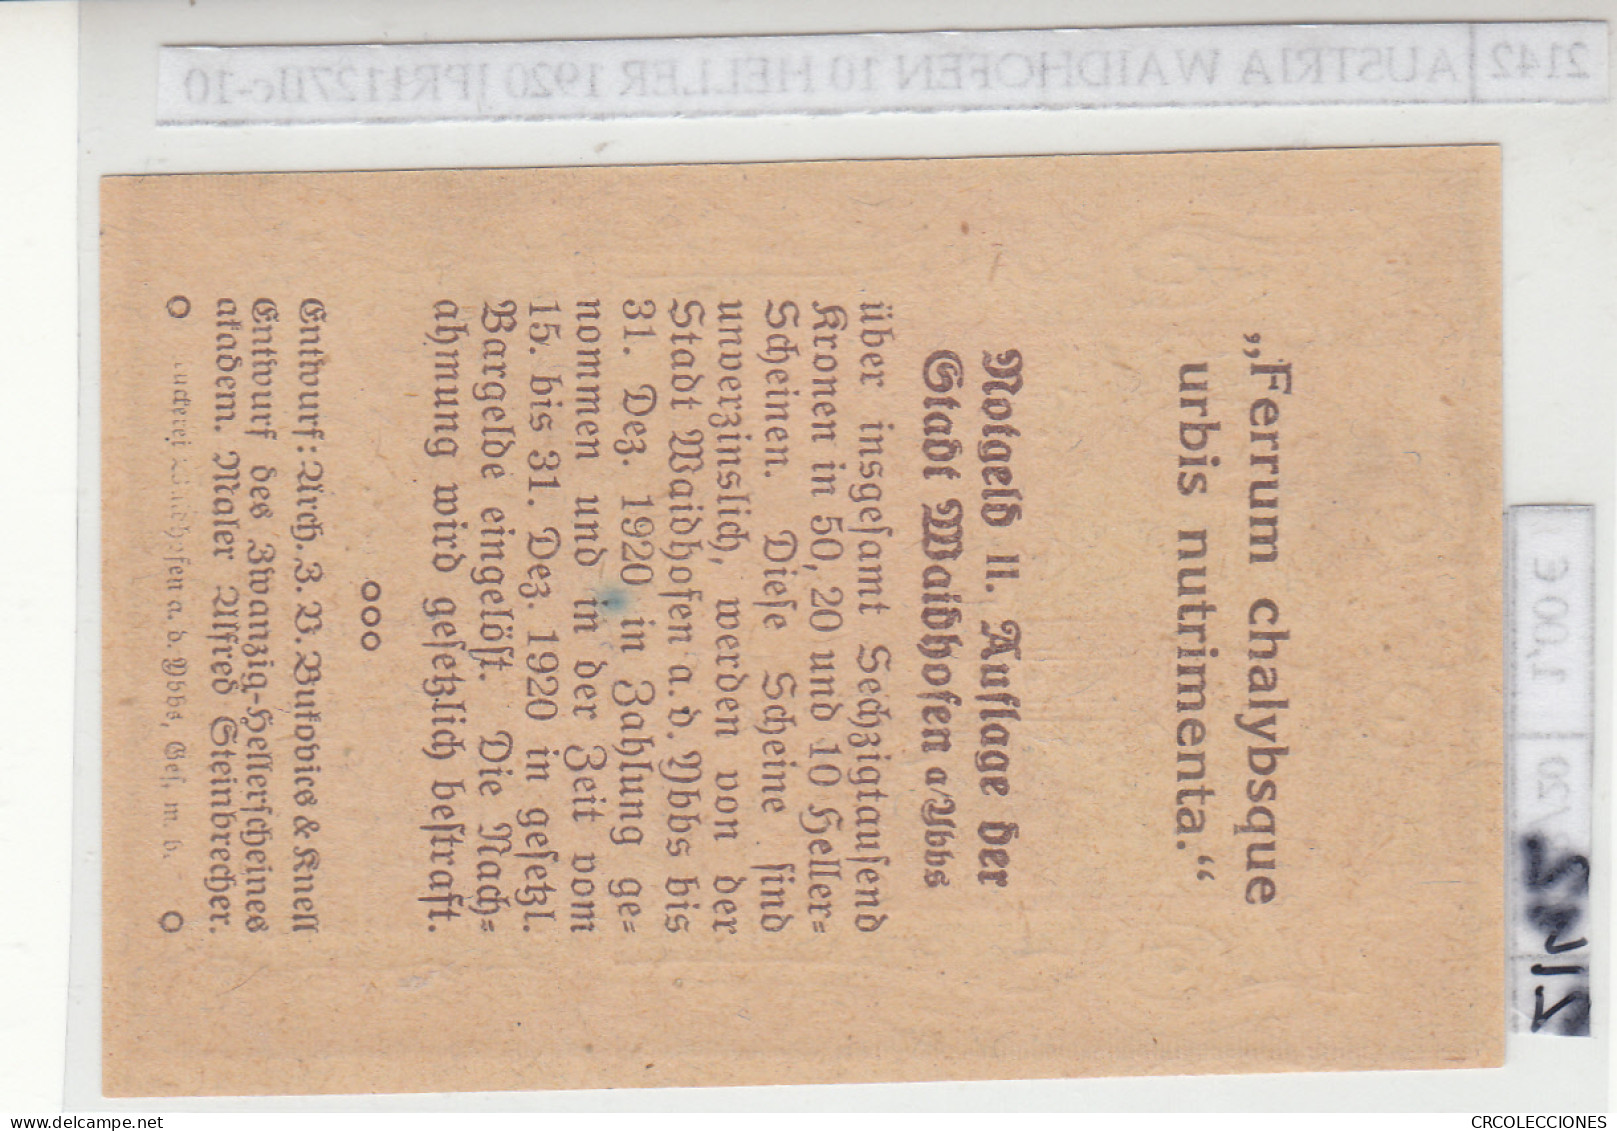 BILLETE AUSTRIA WAIDHOFEN 10 HELLER 1920 JPR1127IIc-10 - Otros – Europa